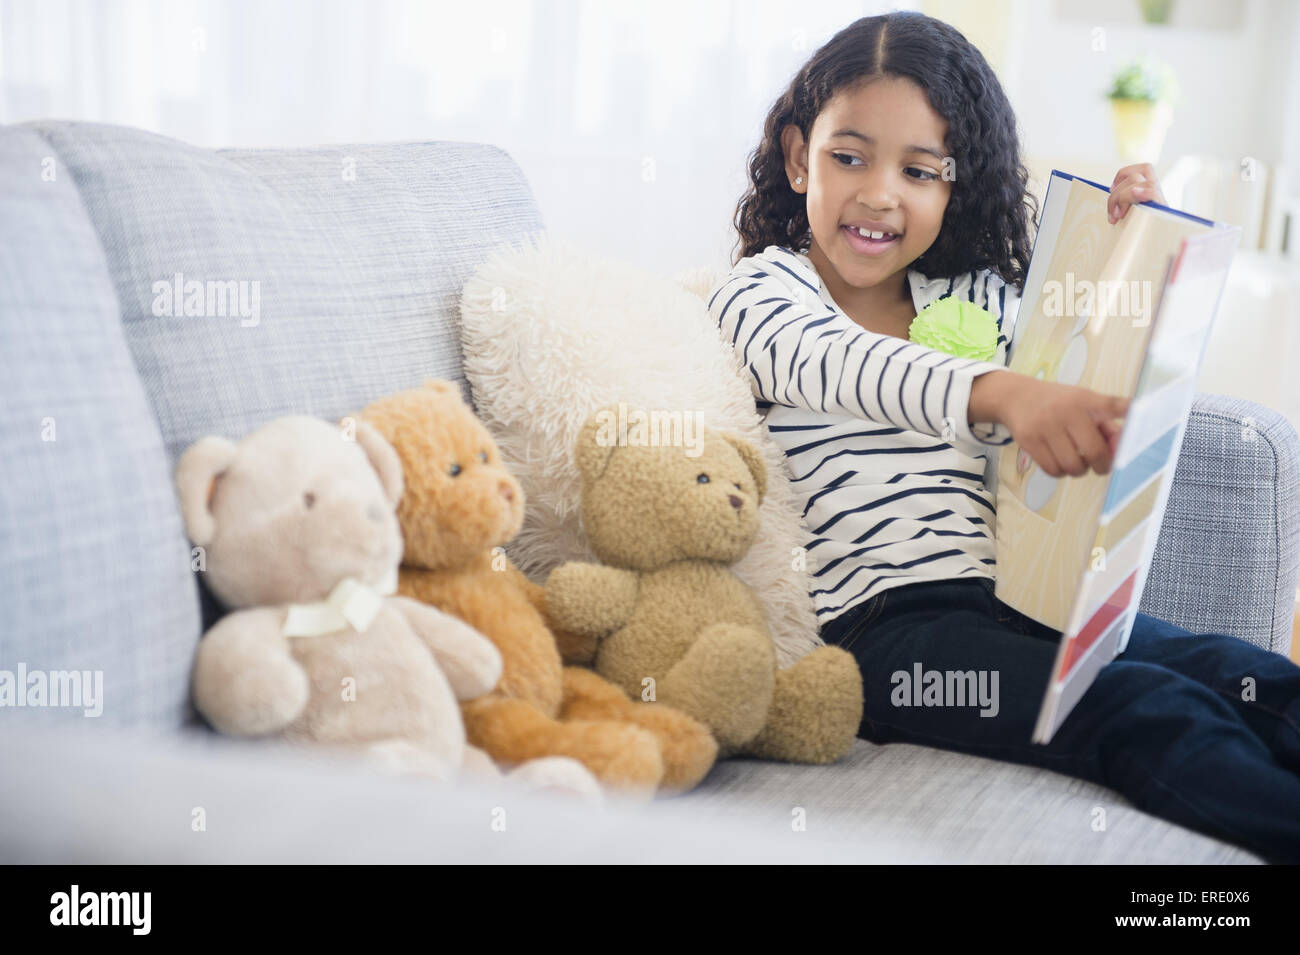 Mixed race girl teaching teddy bears on sofa Stock Photo